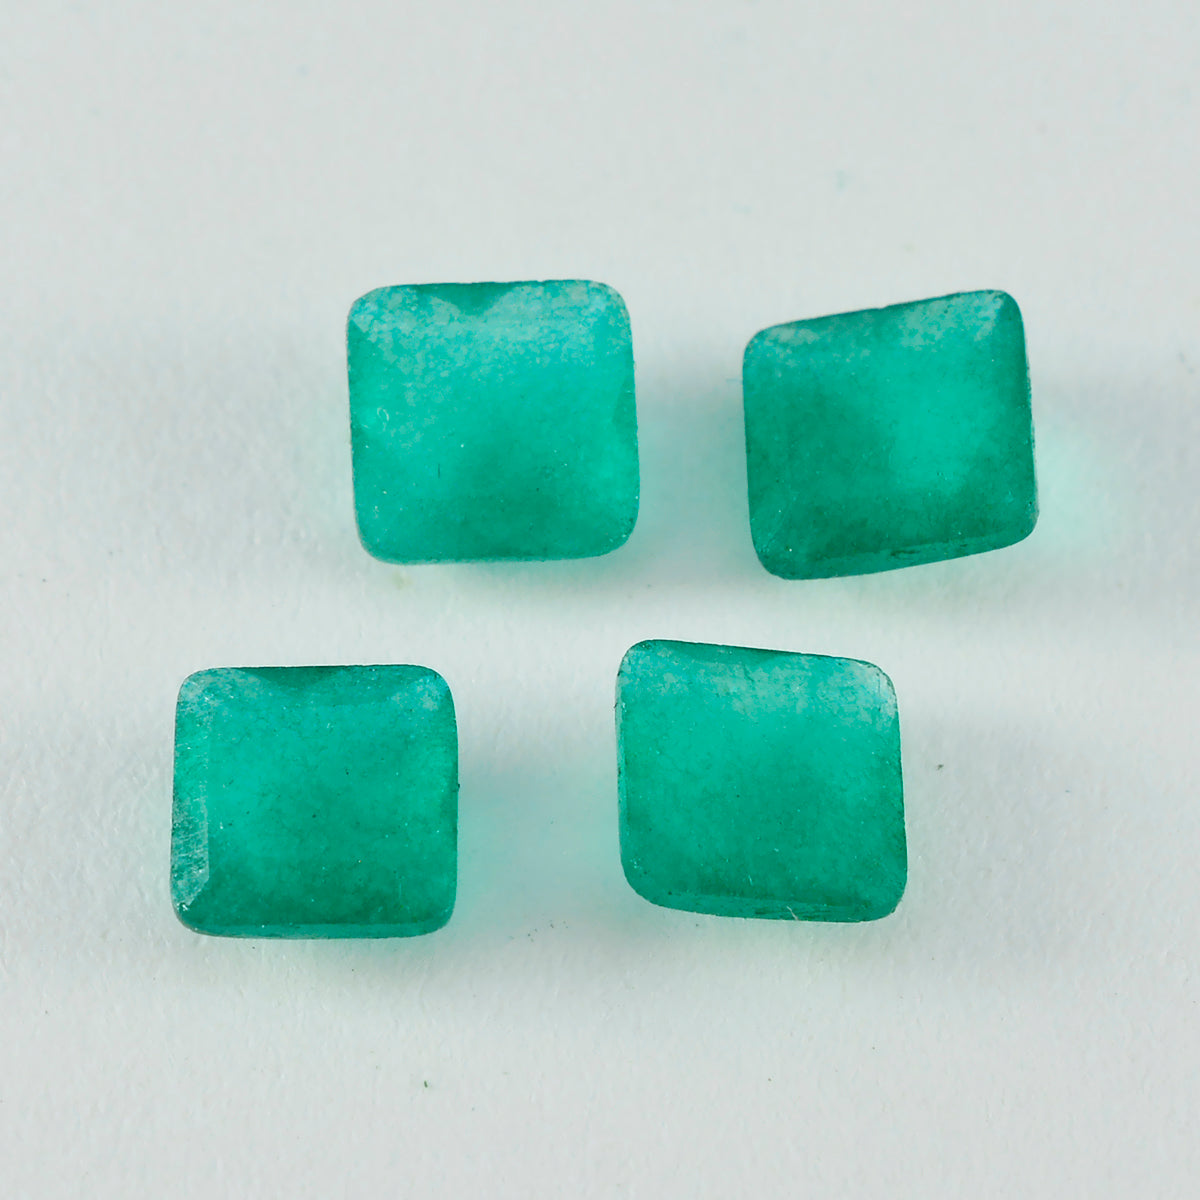 Riyogems 1PC Genuine Green Jasper Faceted 14x14 mm Square Shape AAA Quality Gems